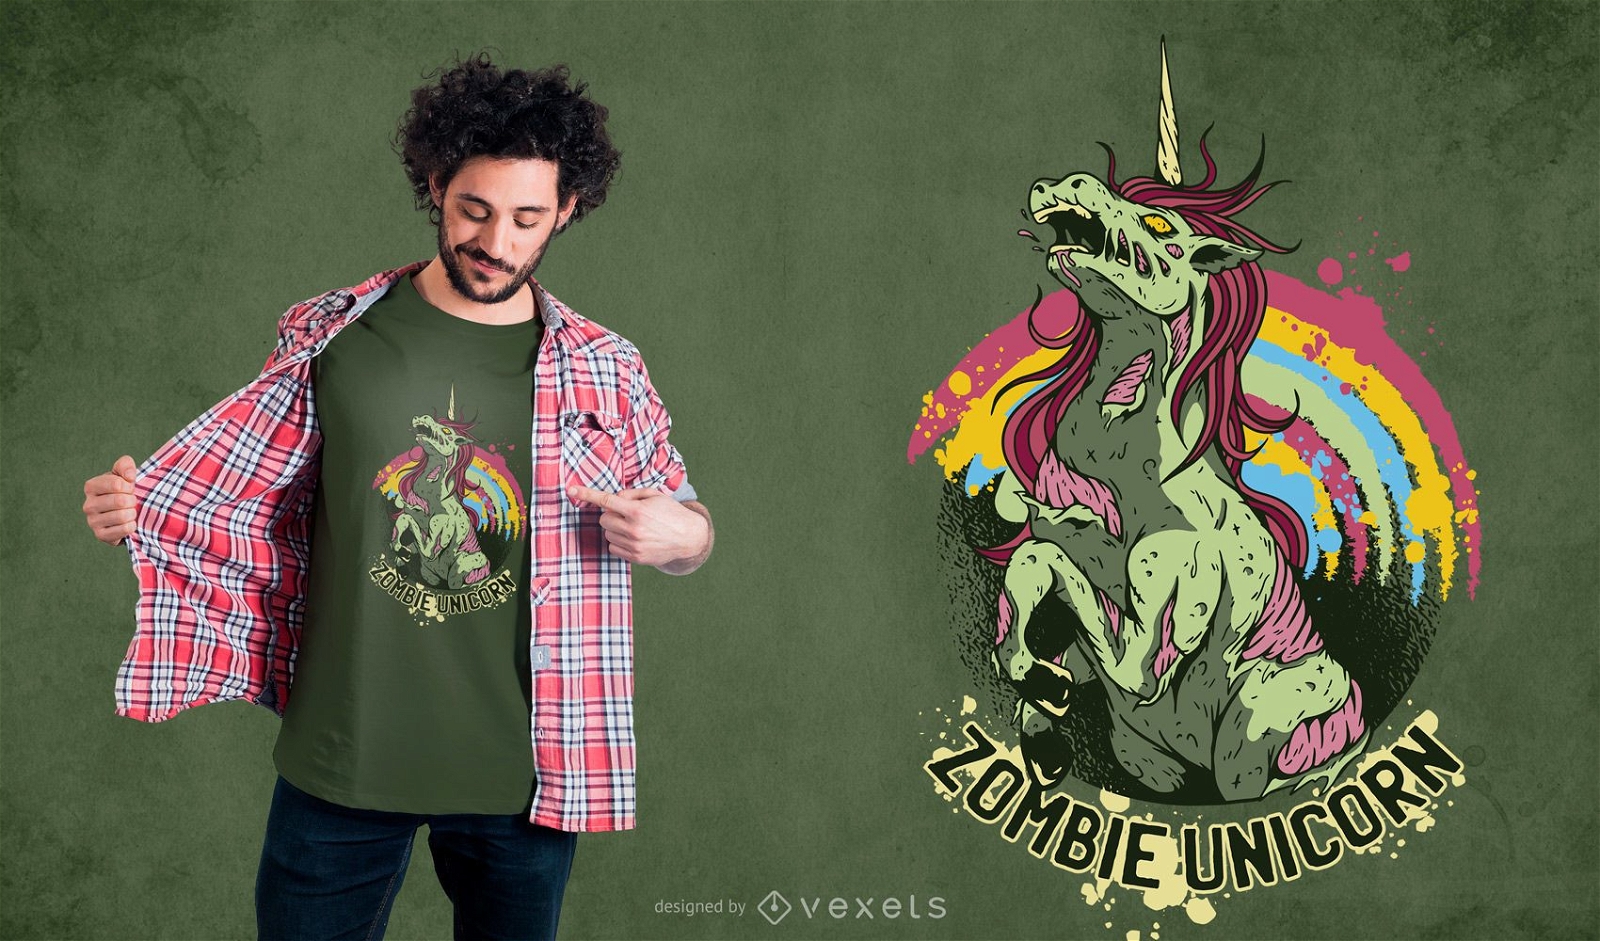 Zombie unicorn t-shirt design